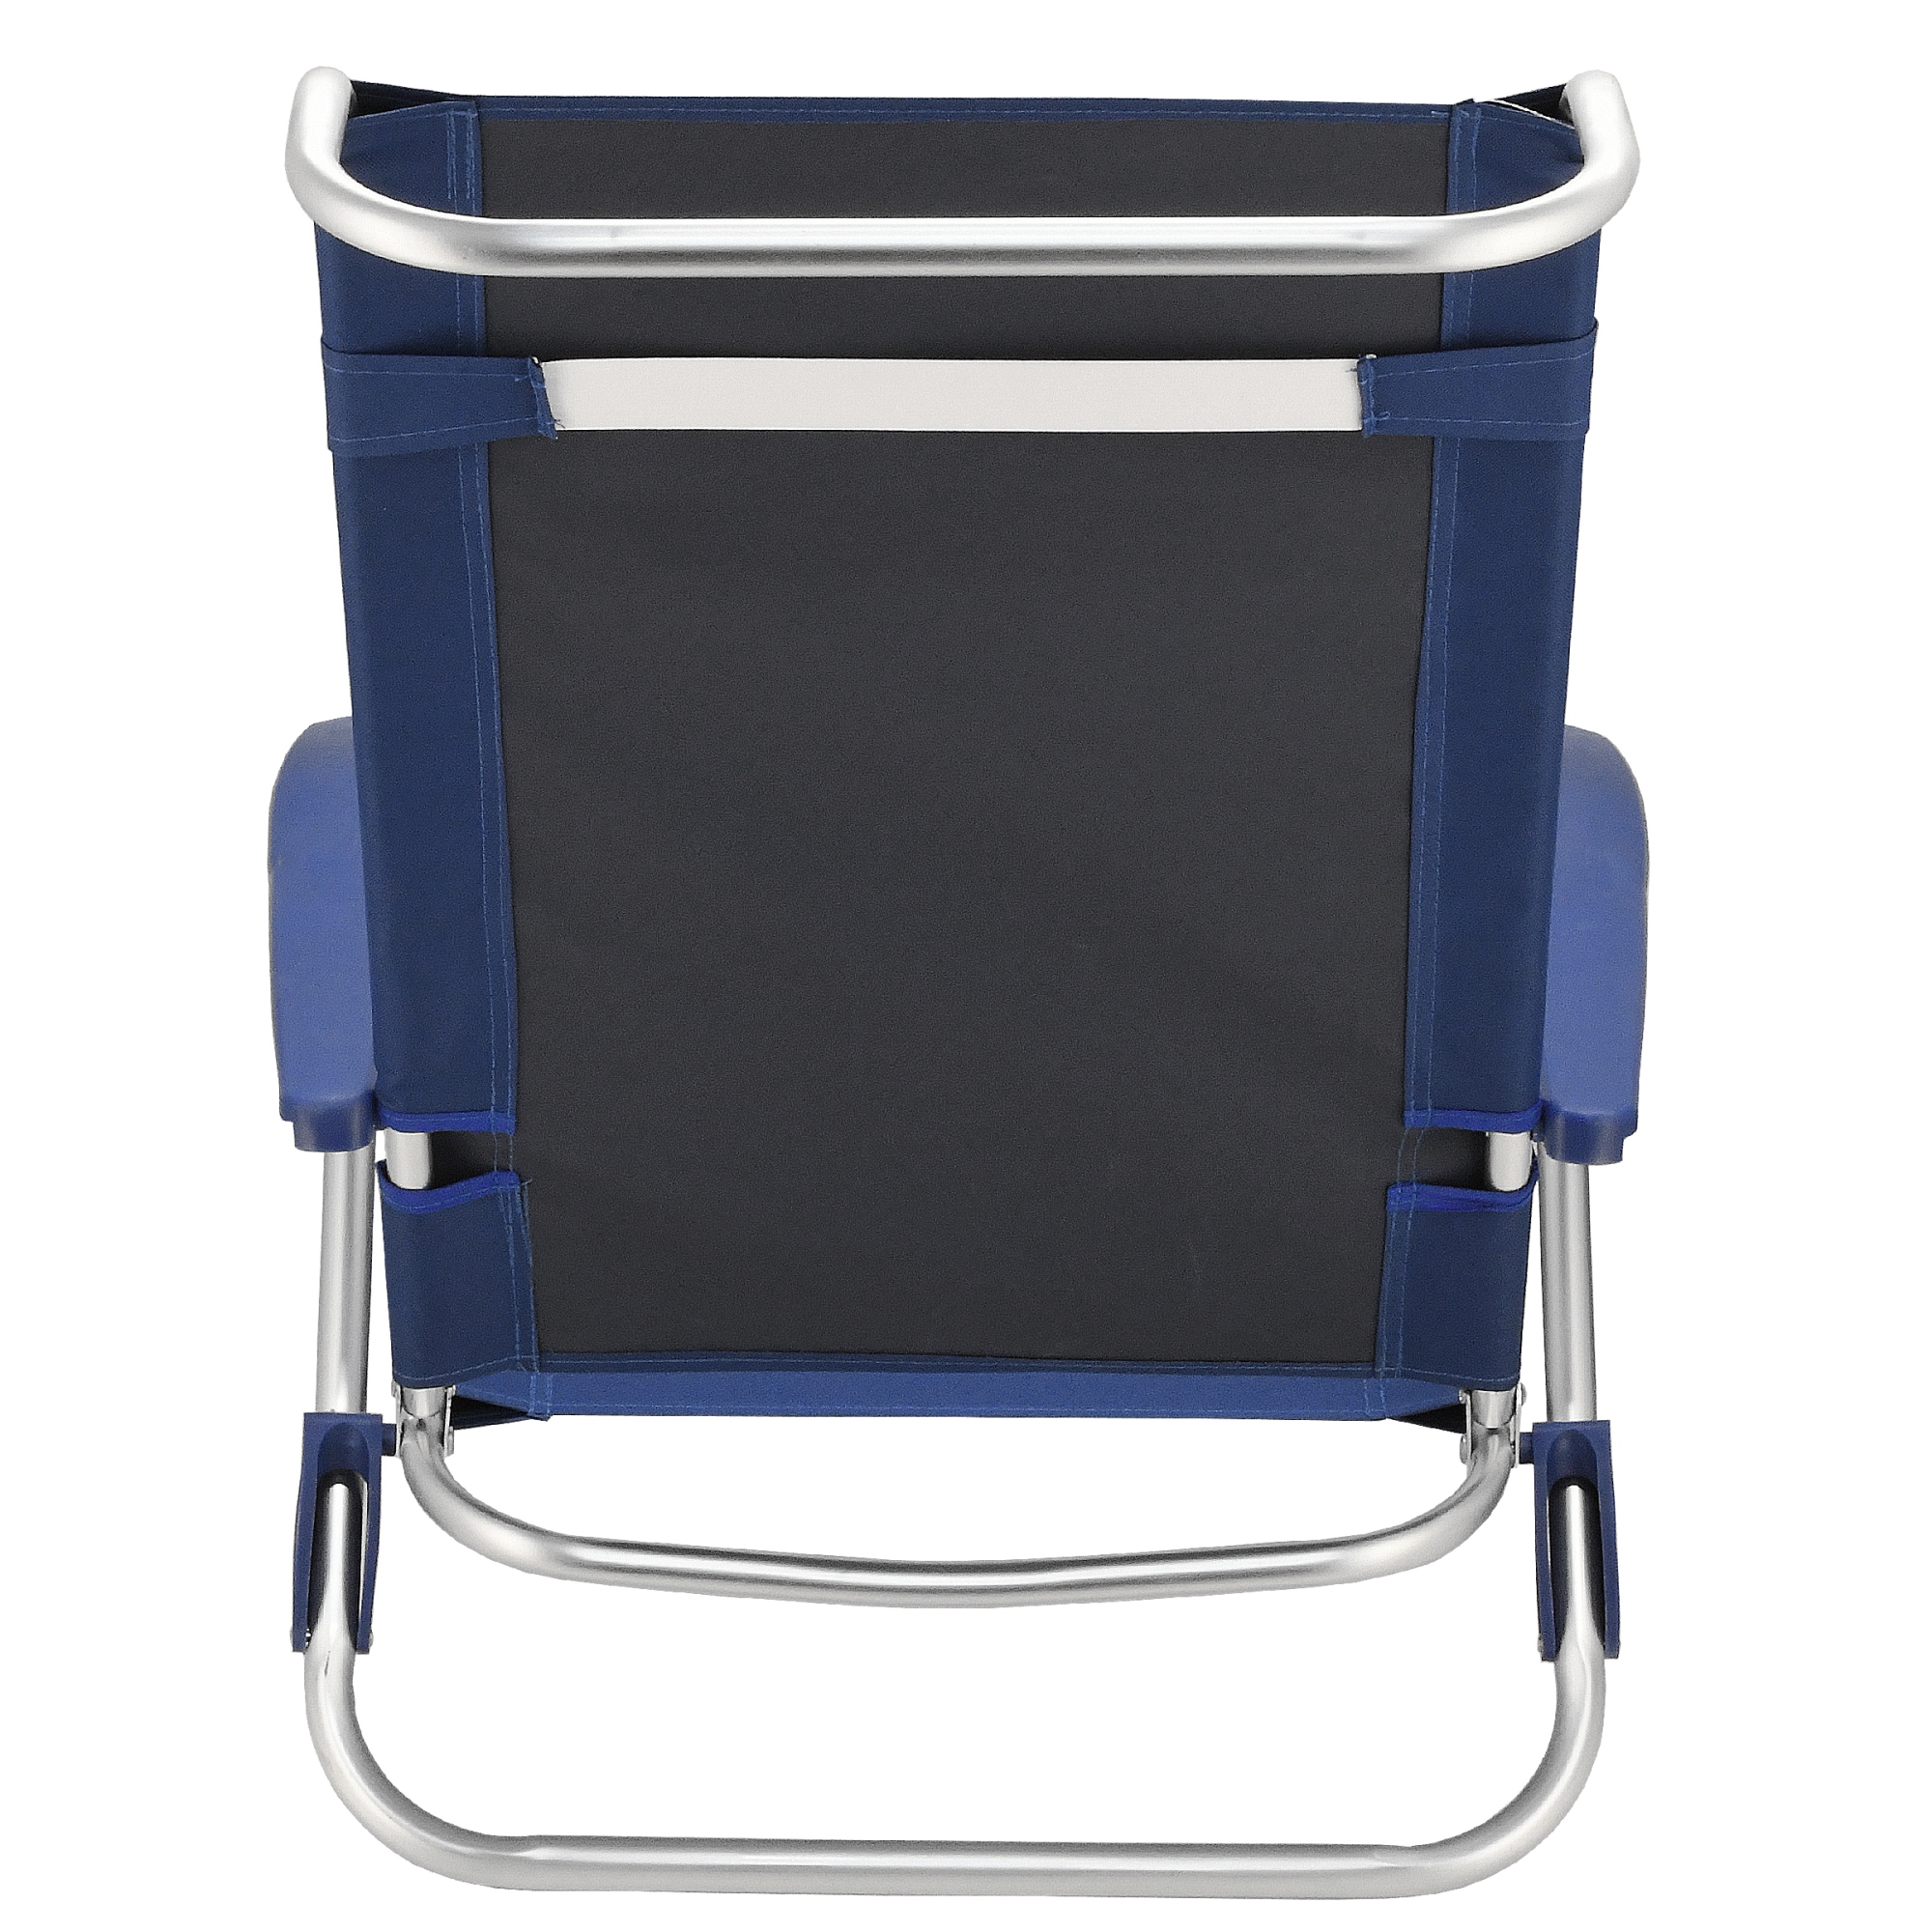 23" x 18.5" Cobalt Blue 5-Position Folding Beach Chair - image 2 of 3